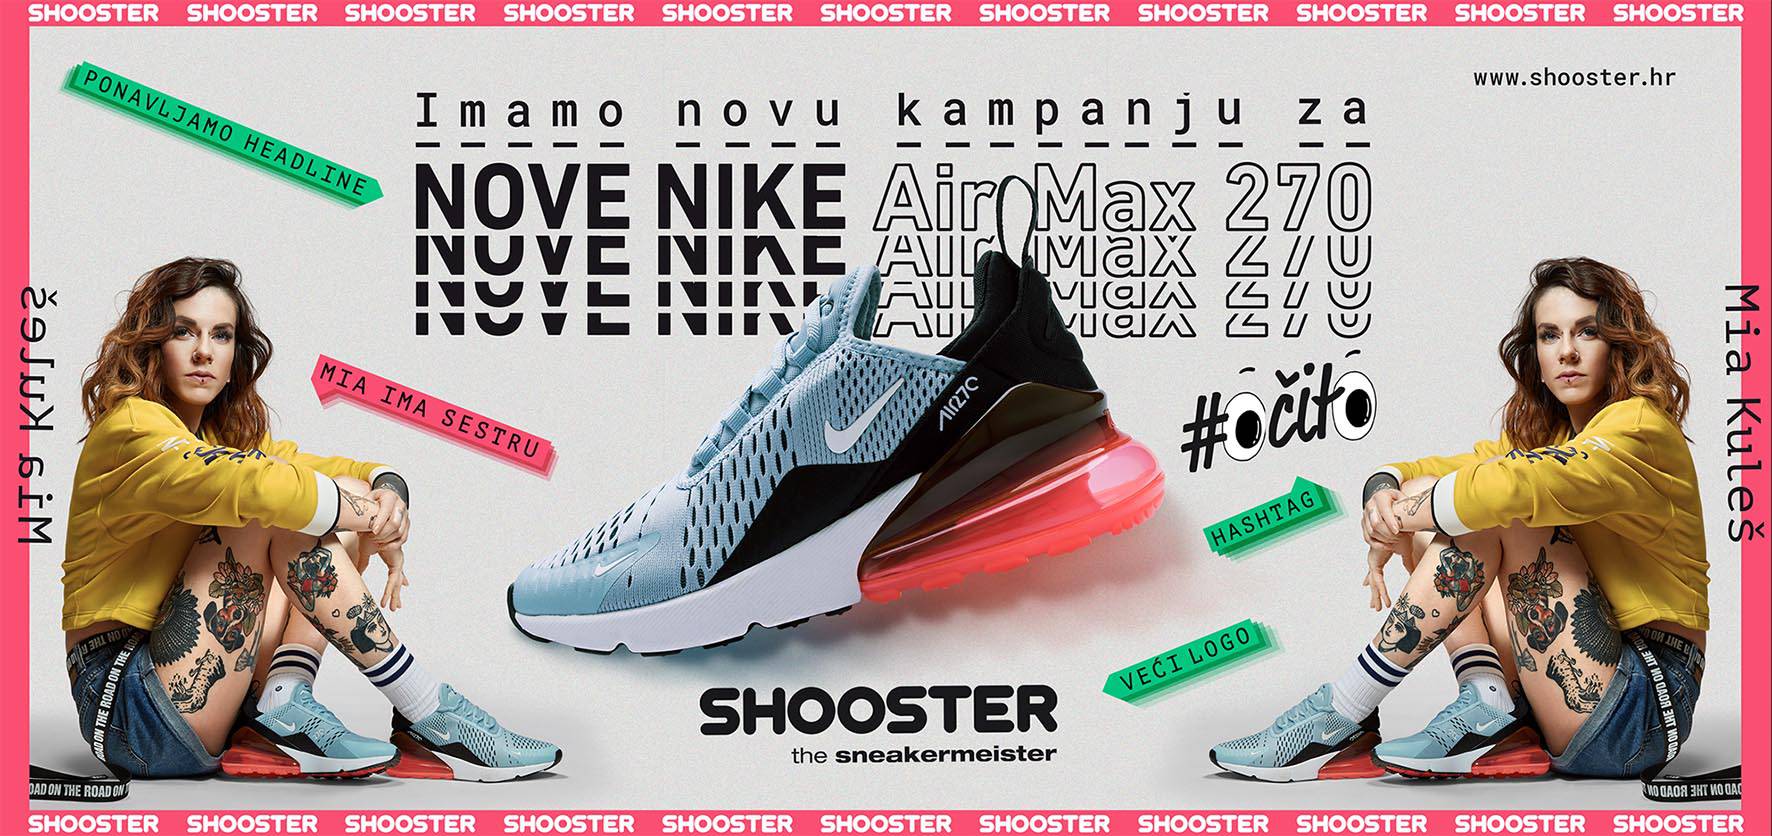 Očito imamo kampanju za nove Nike Air Max 270